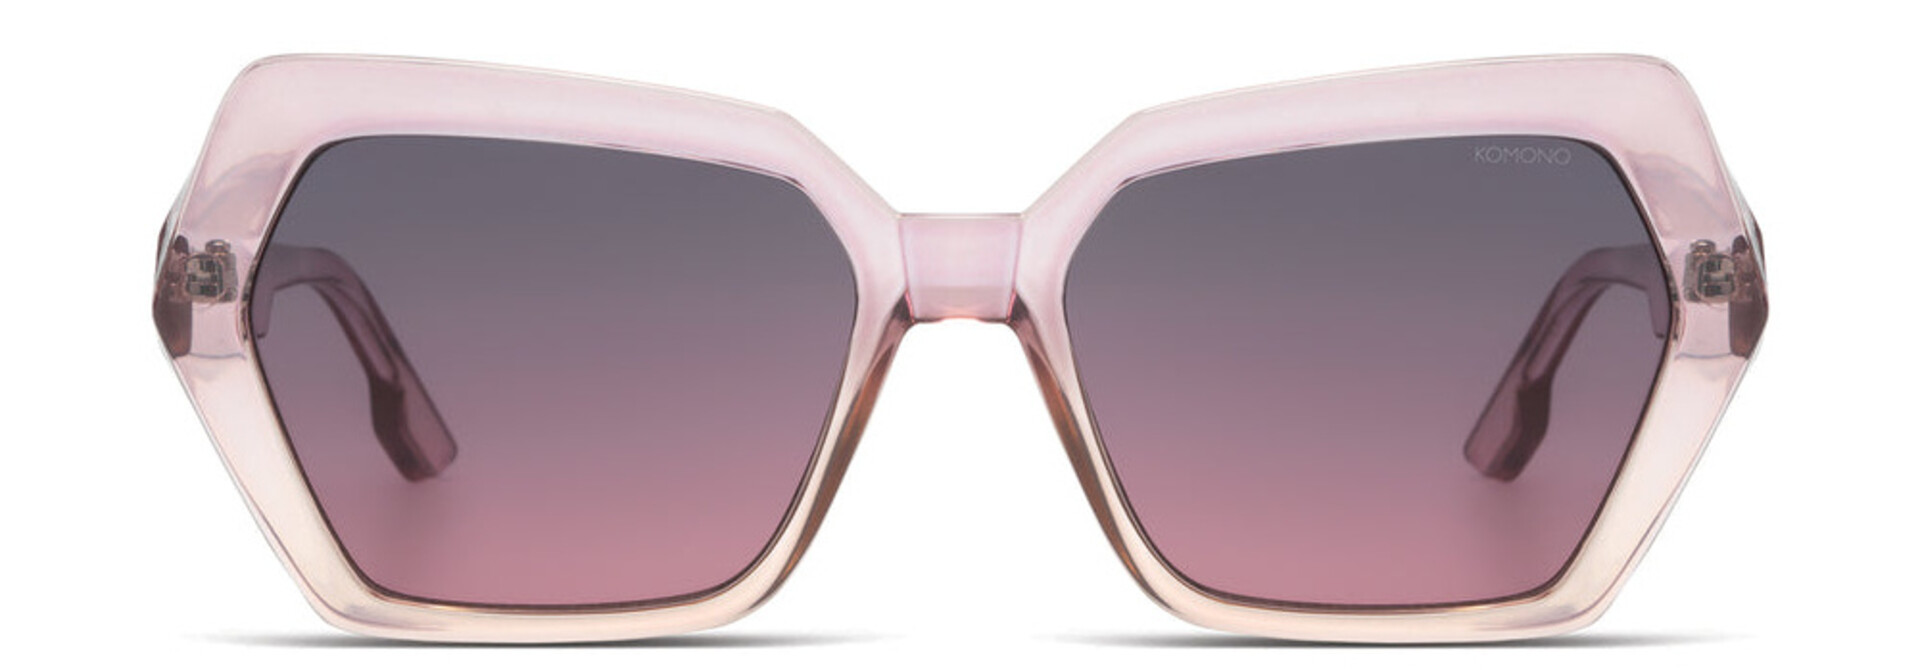 ♣ Poly Blush Sunglasses